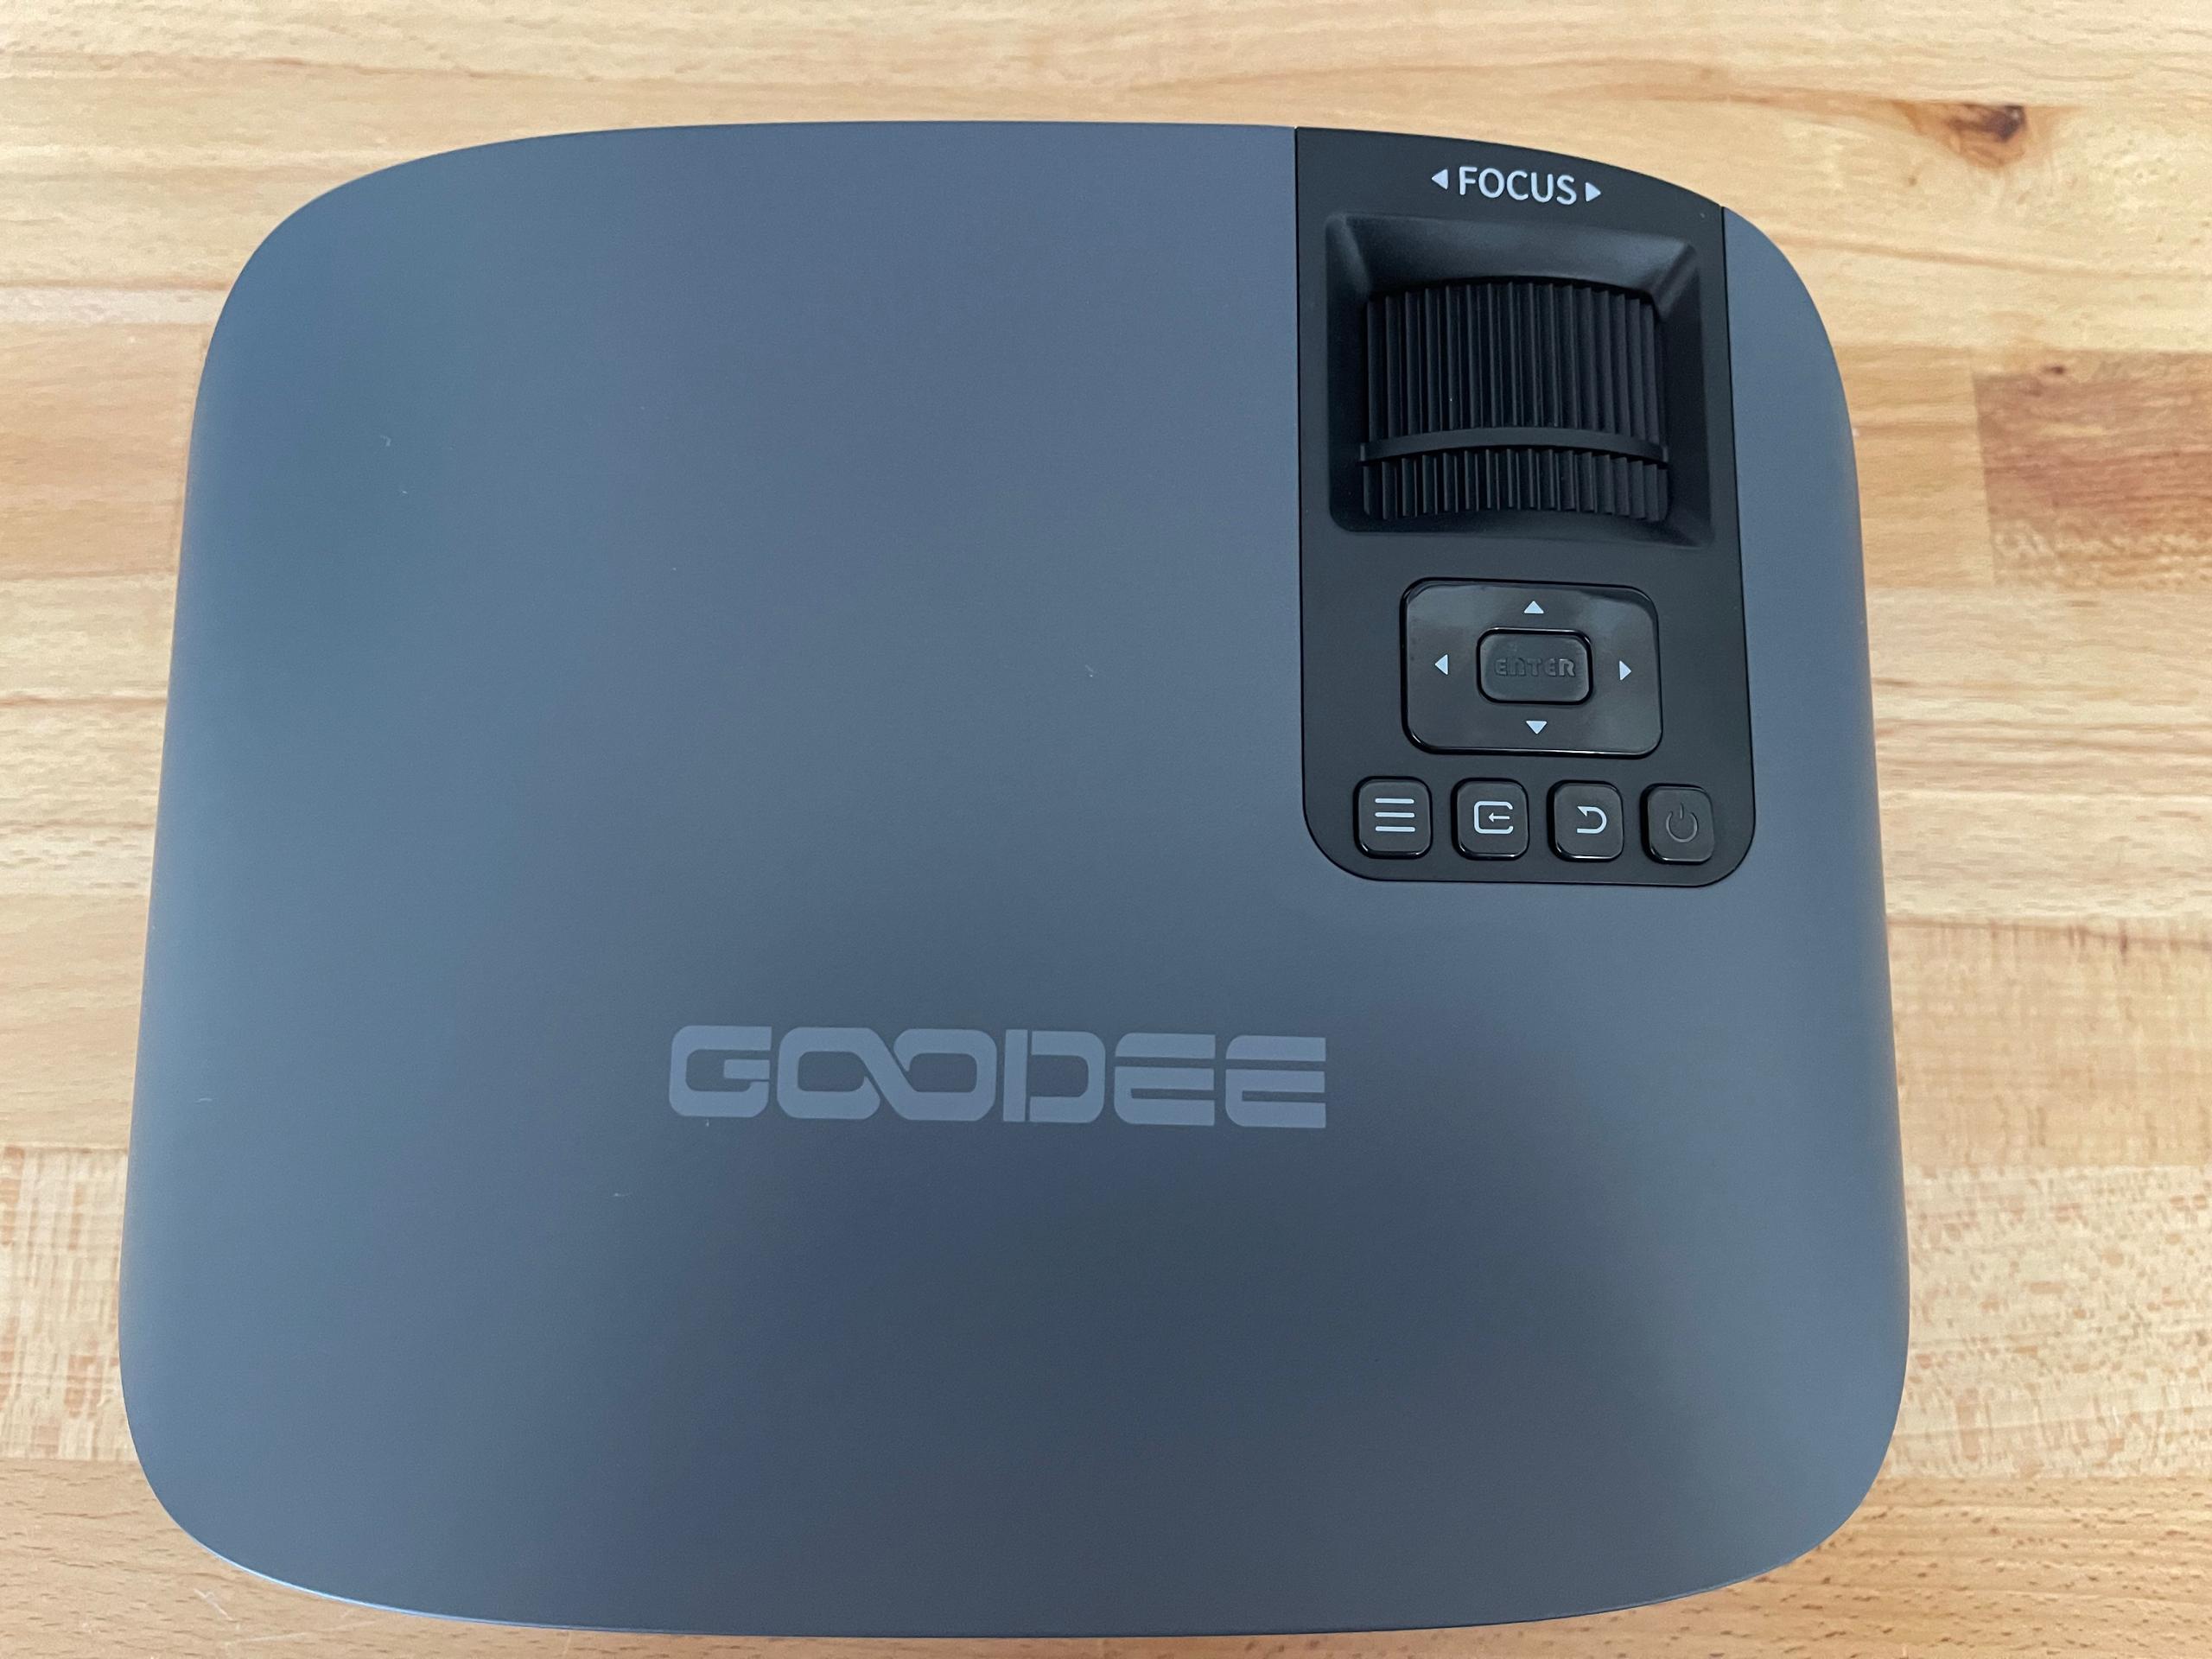 GooDee Y600 Plus Video Projector from bird's eye perspective